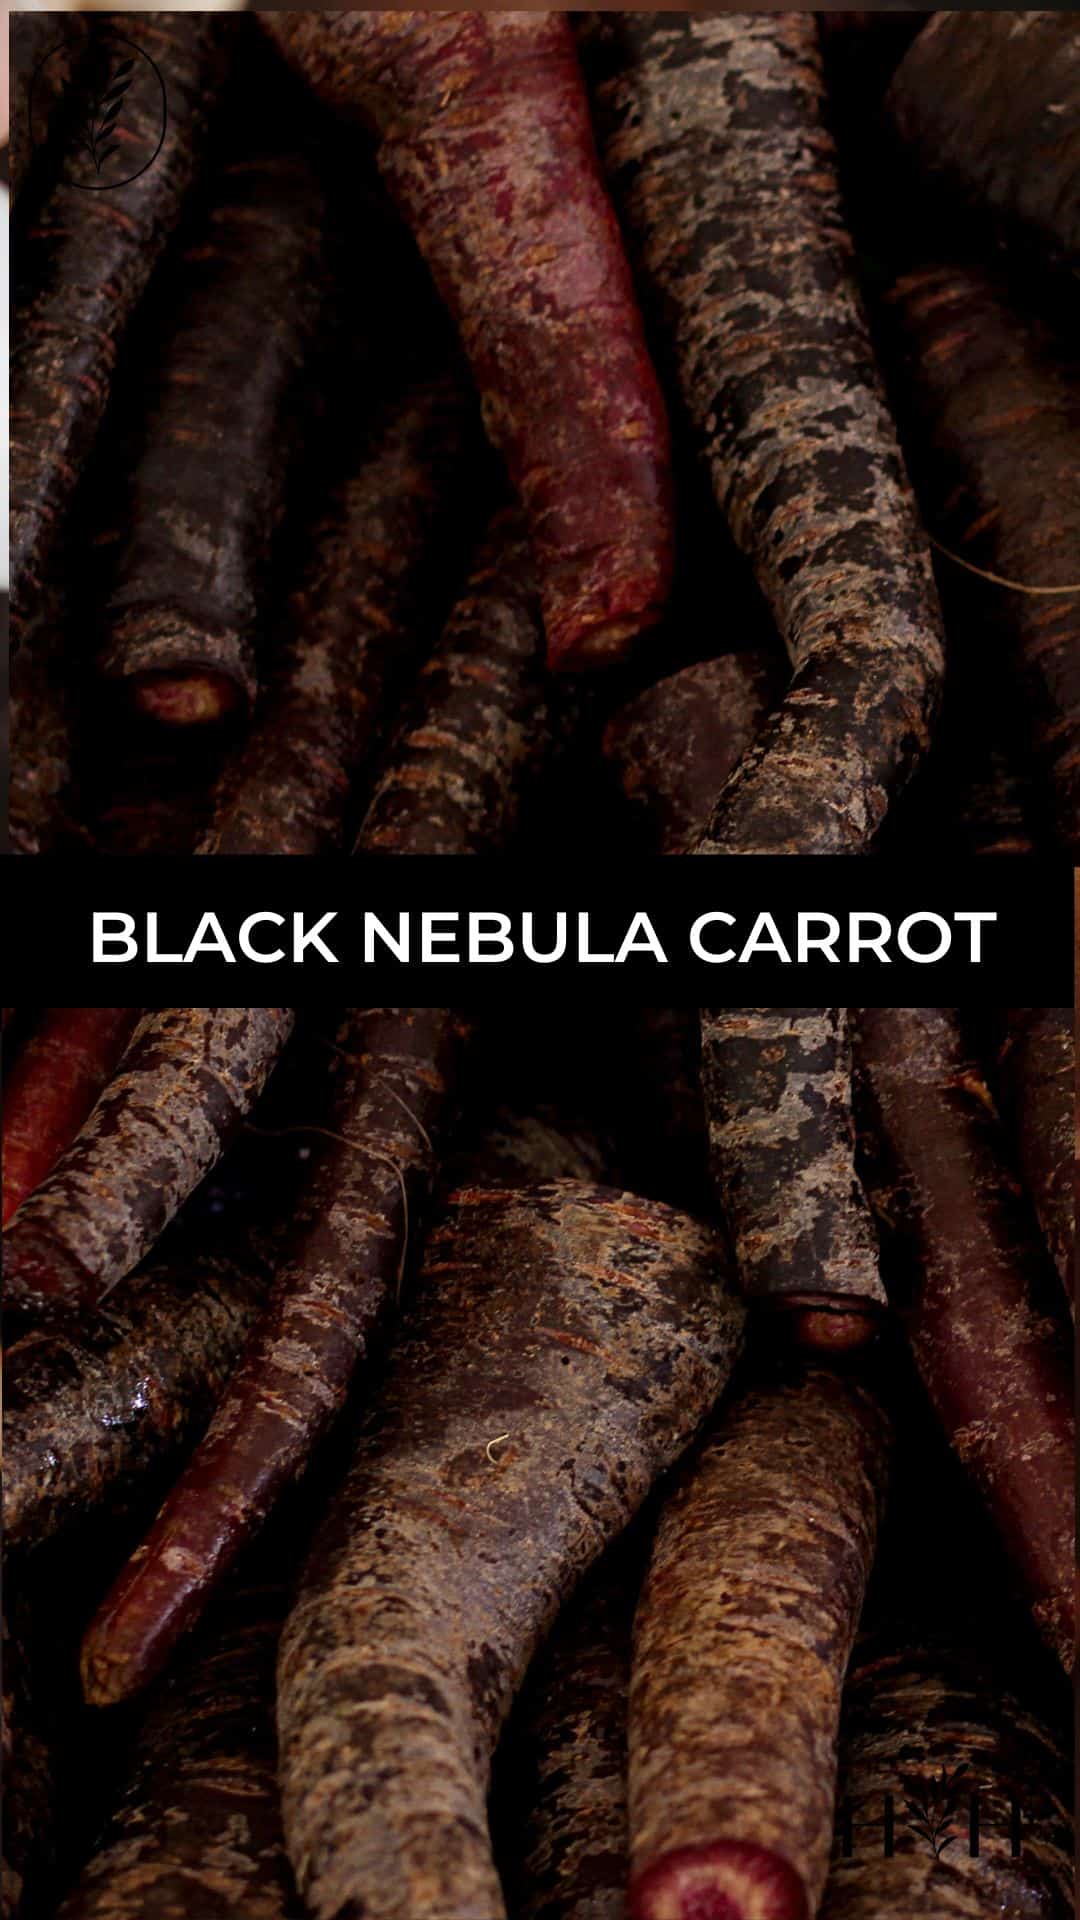 Black nebula carrot via @home4theharvest